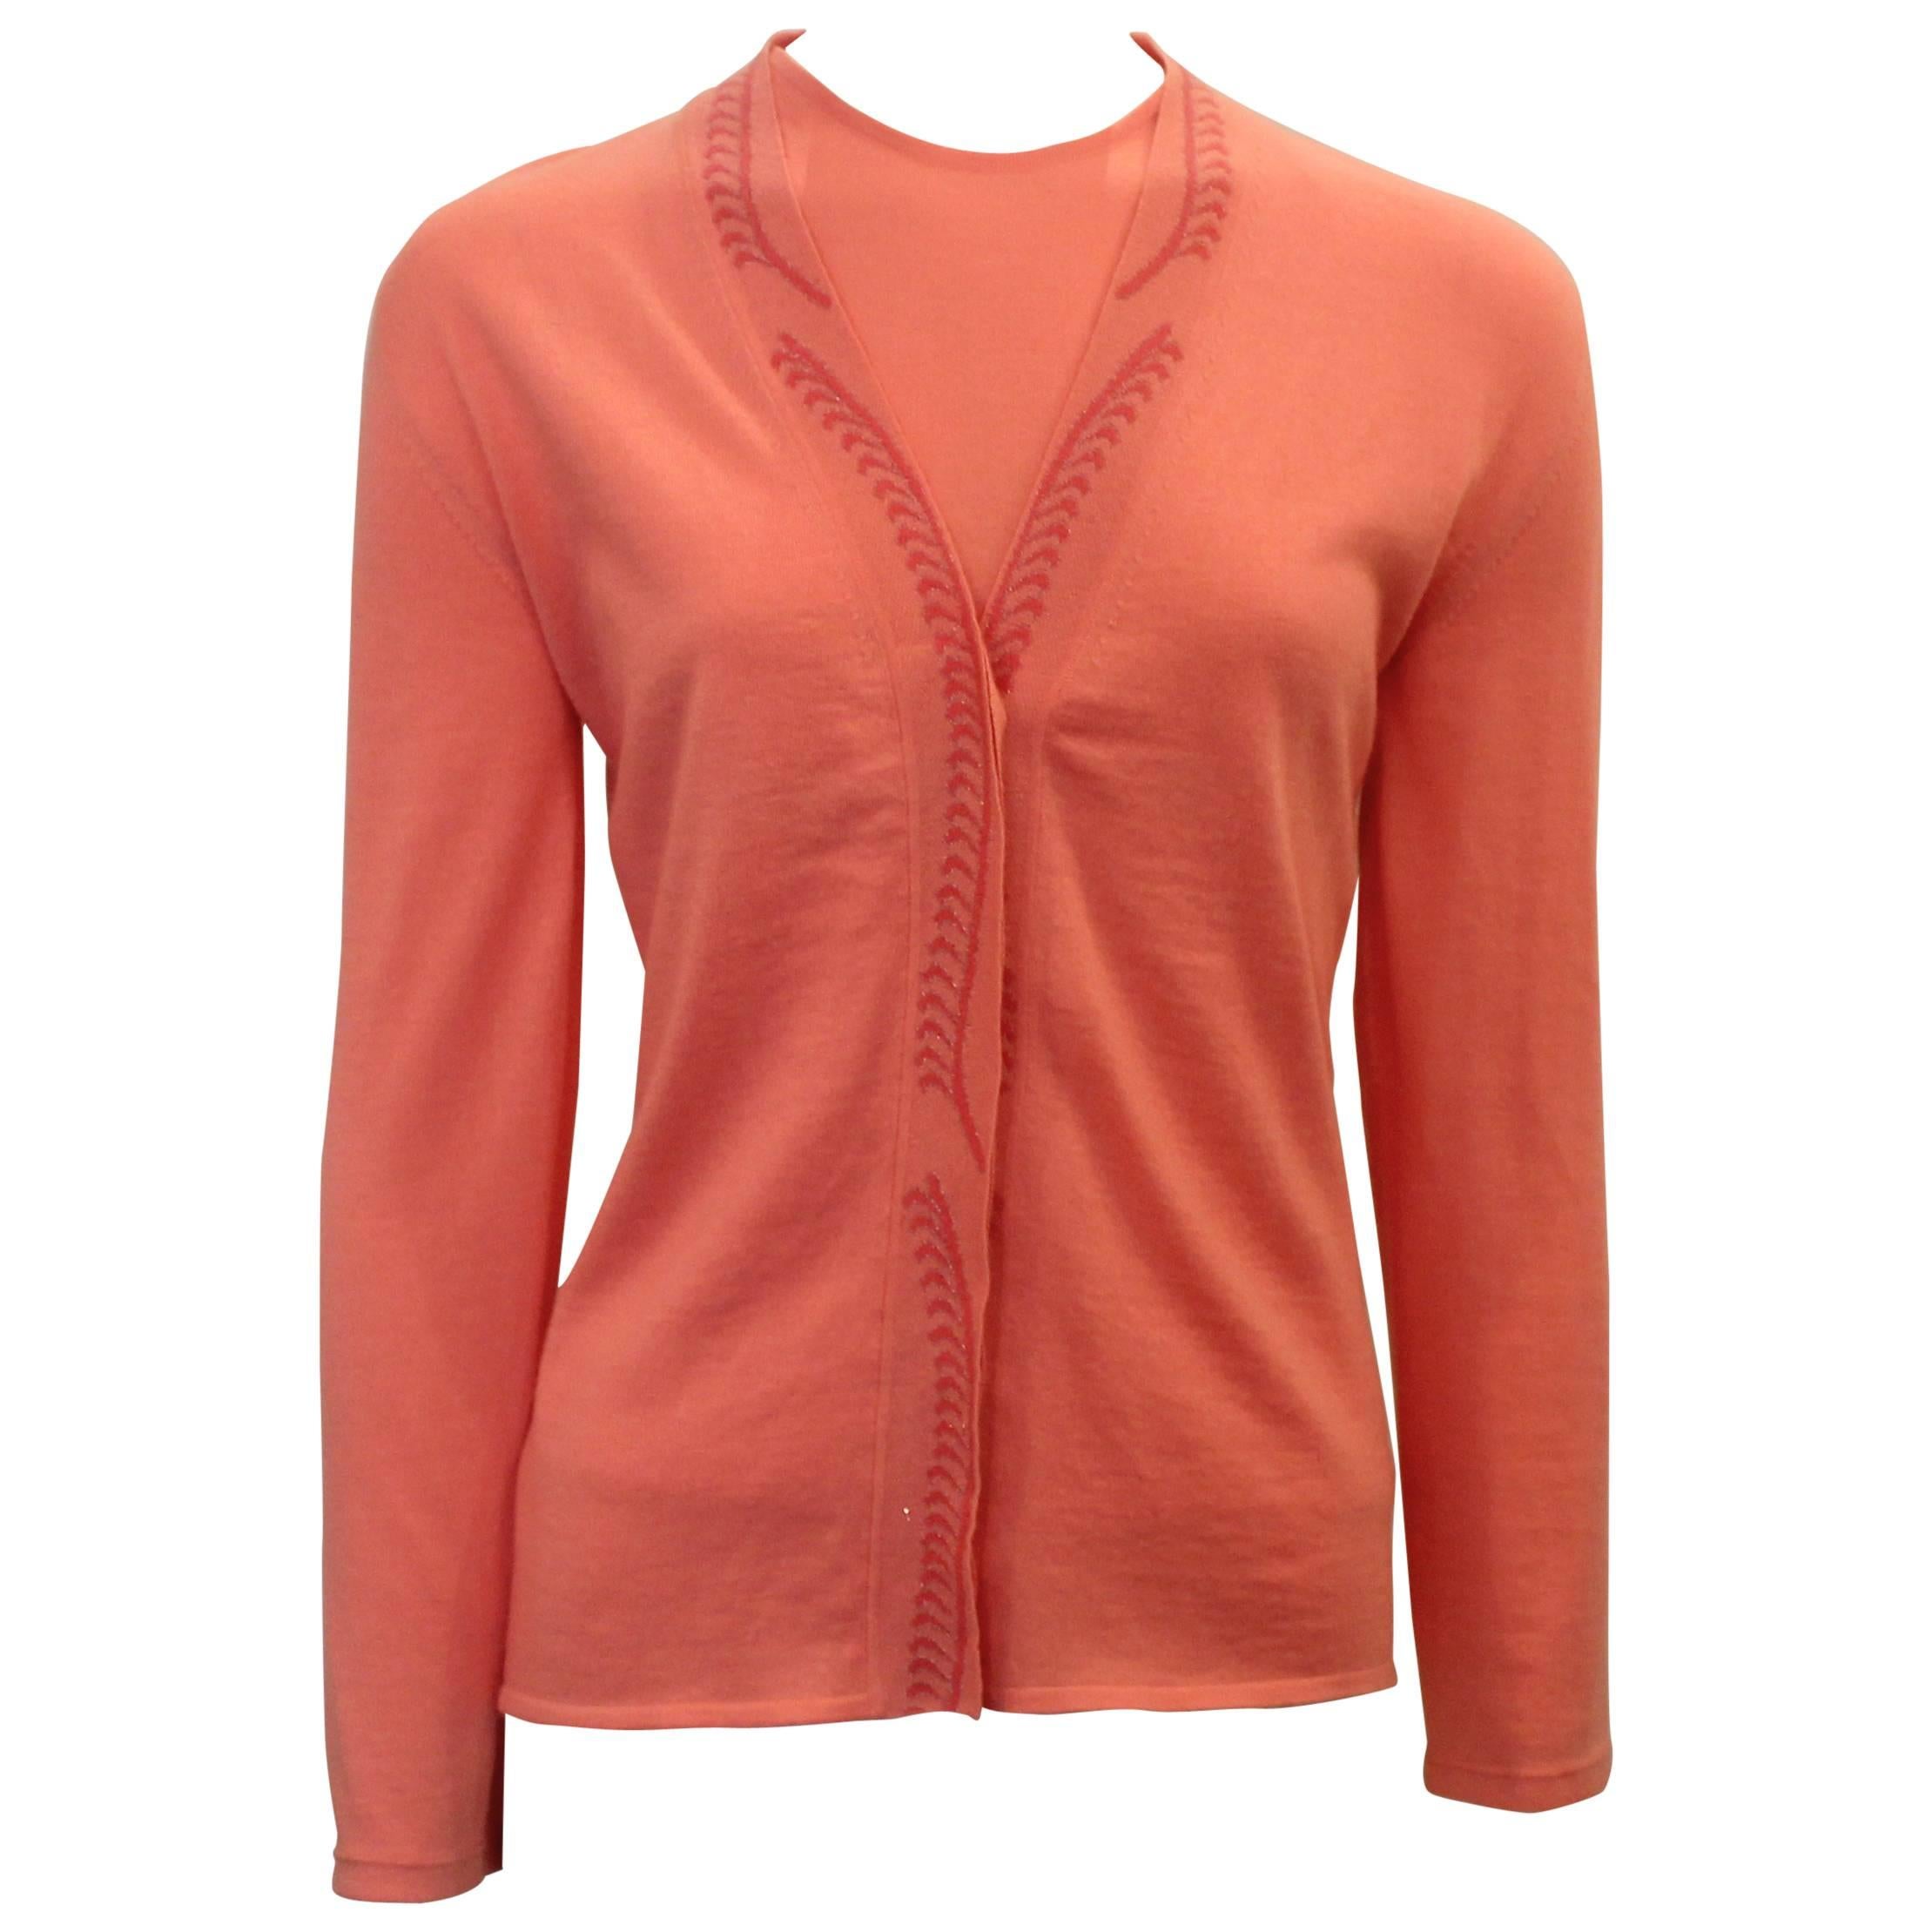 Emilio Pucci Coral Cashmere Blend Sweater Set - XS - 1990's For Sale